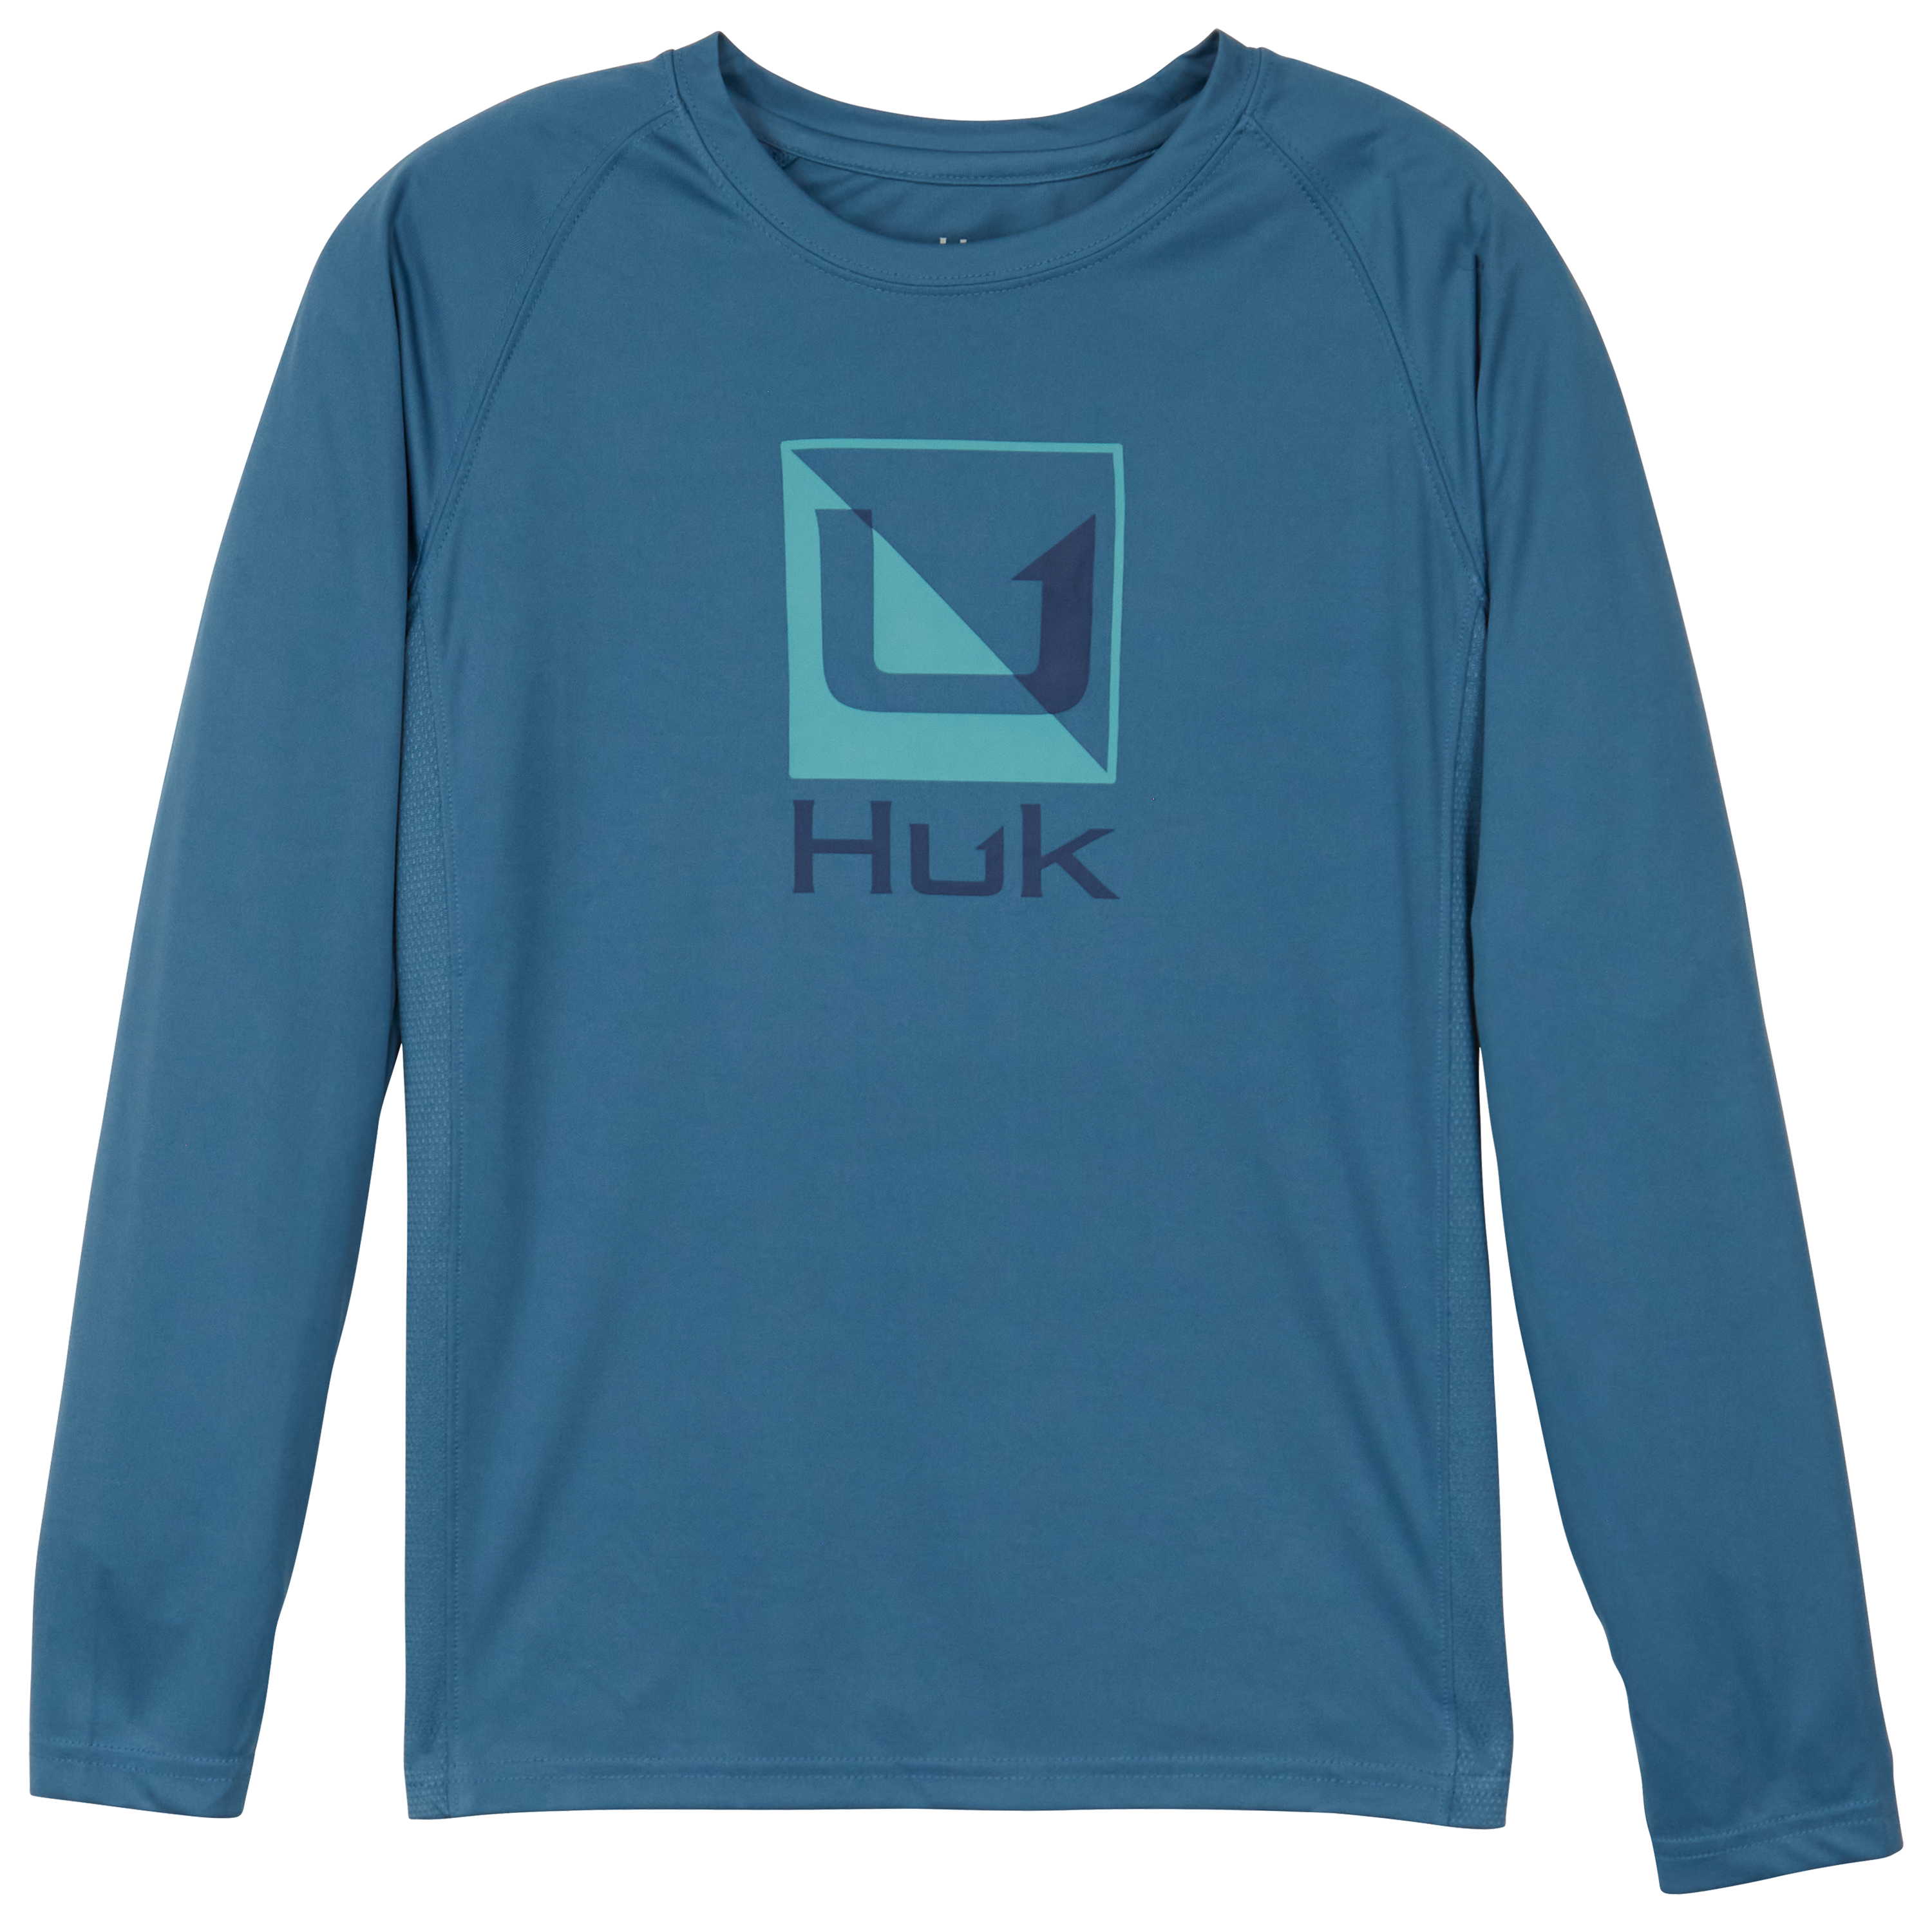 Huk Reflection Pursuit Long-Sleeve Shirt for Kids